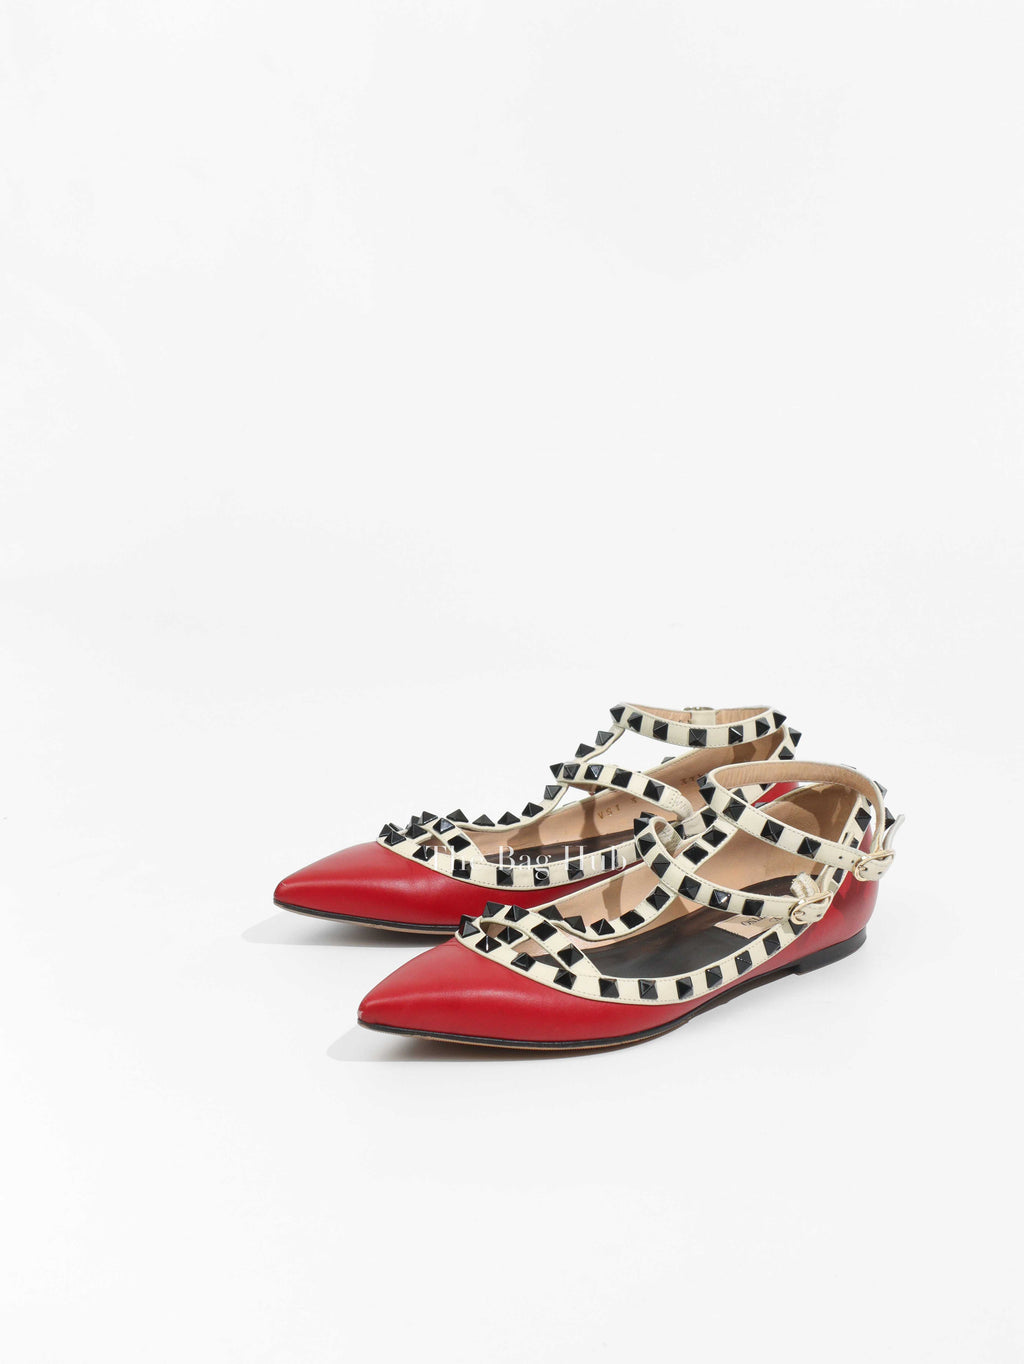 Valentino Garavani Red/White Leather Rockstud T-Strap Sandals Size 37